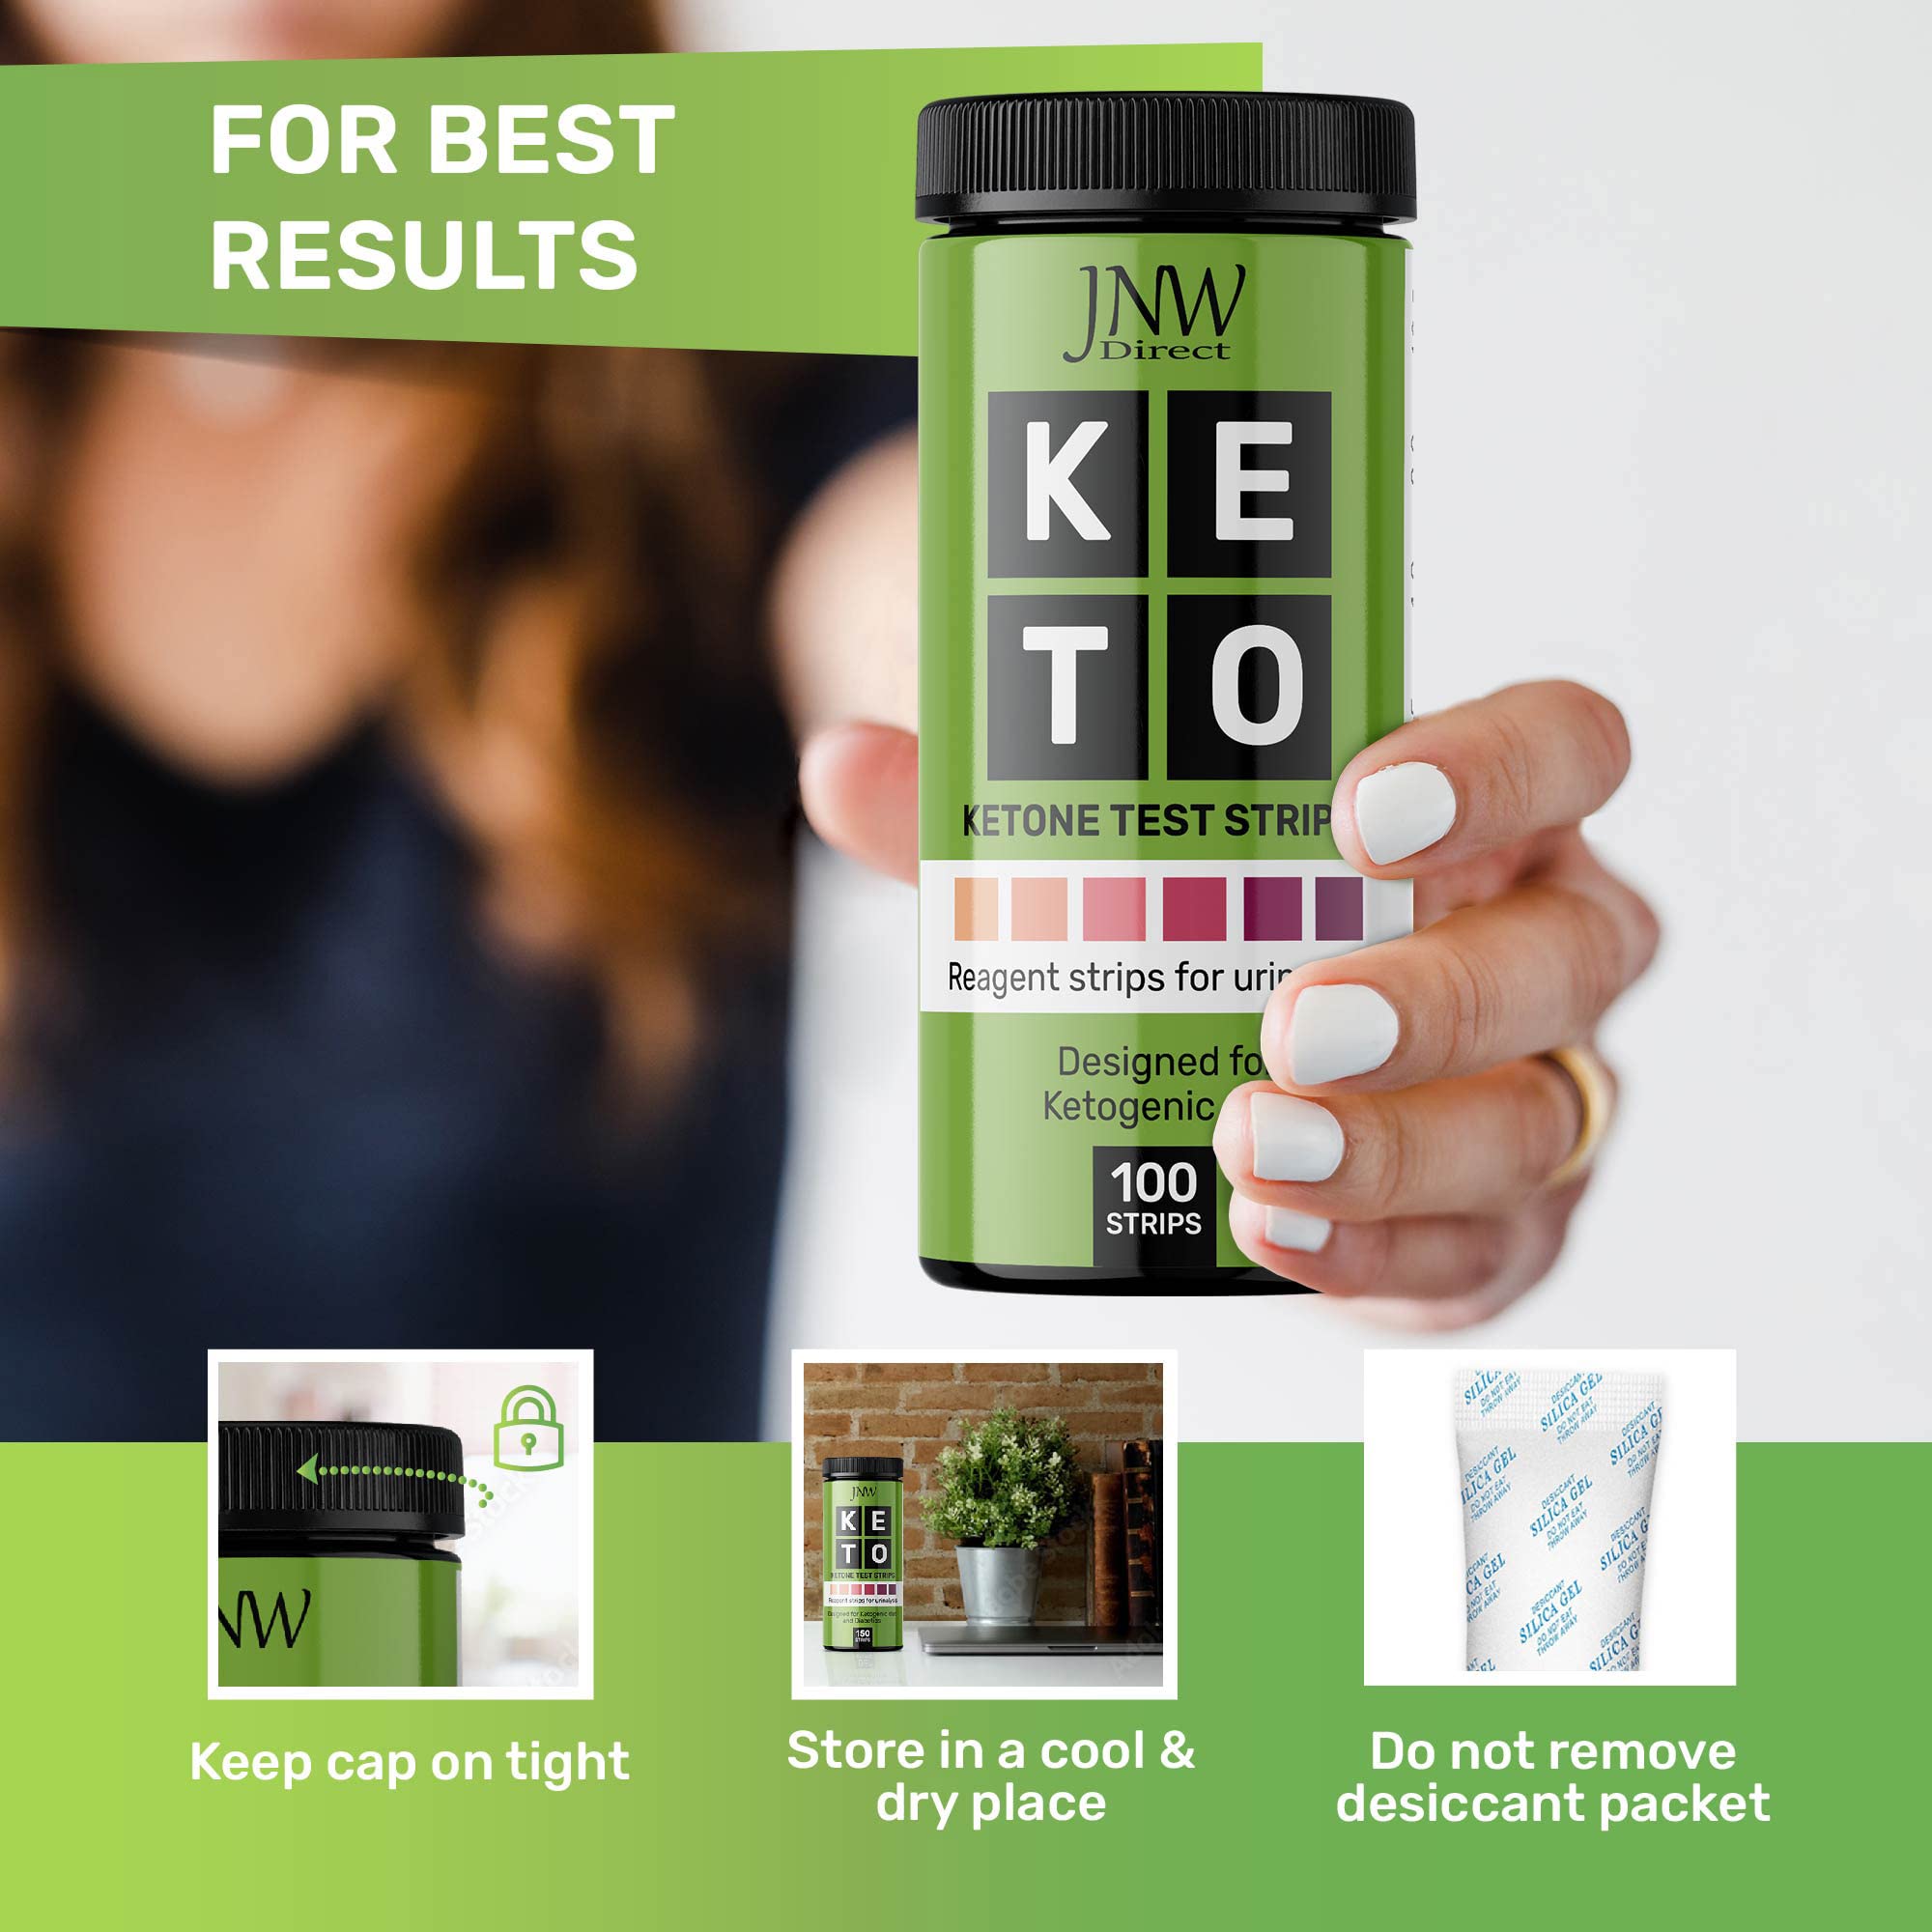 Ketone Test Strips, 100 Keto Test Strips for Keto, Low Carb Diet - Urine Test Strips, Ketosis Strips Test Urine, Keto Strips, Ketone Urinalysis Test Strips, Ketones Test Kit - Free eBook - JNW Direct